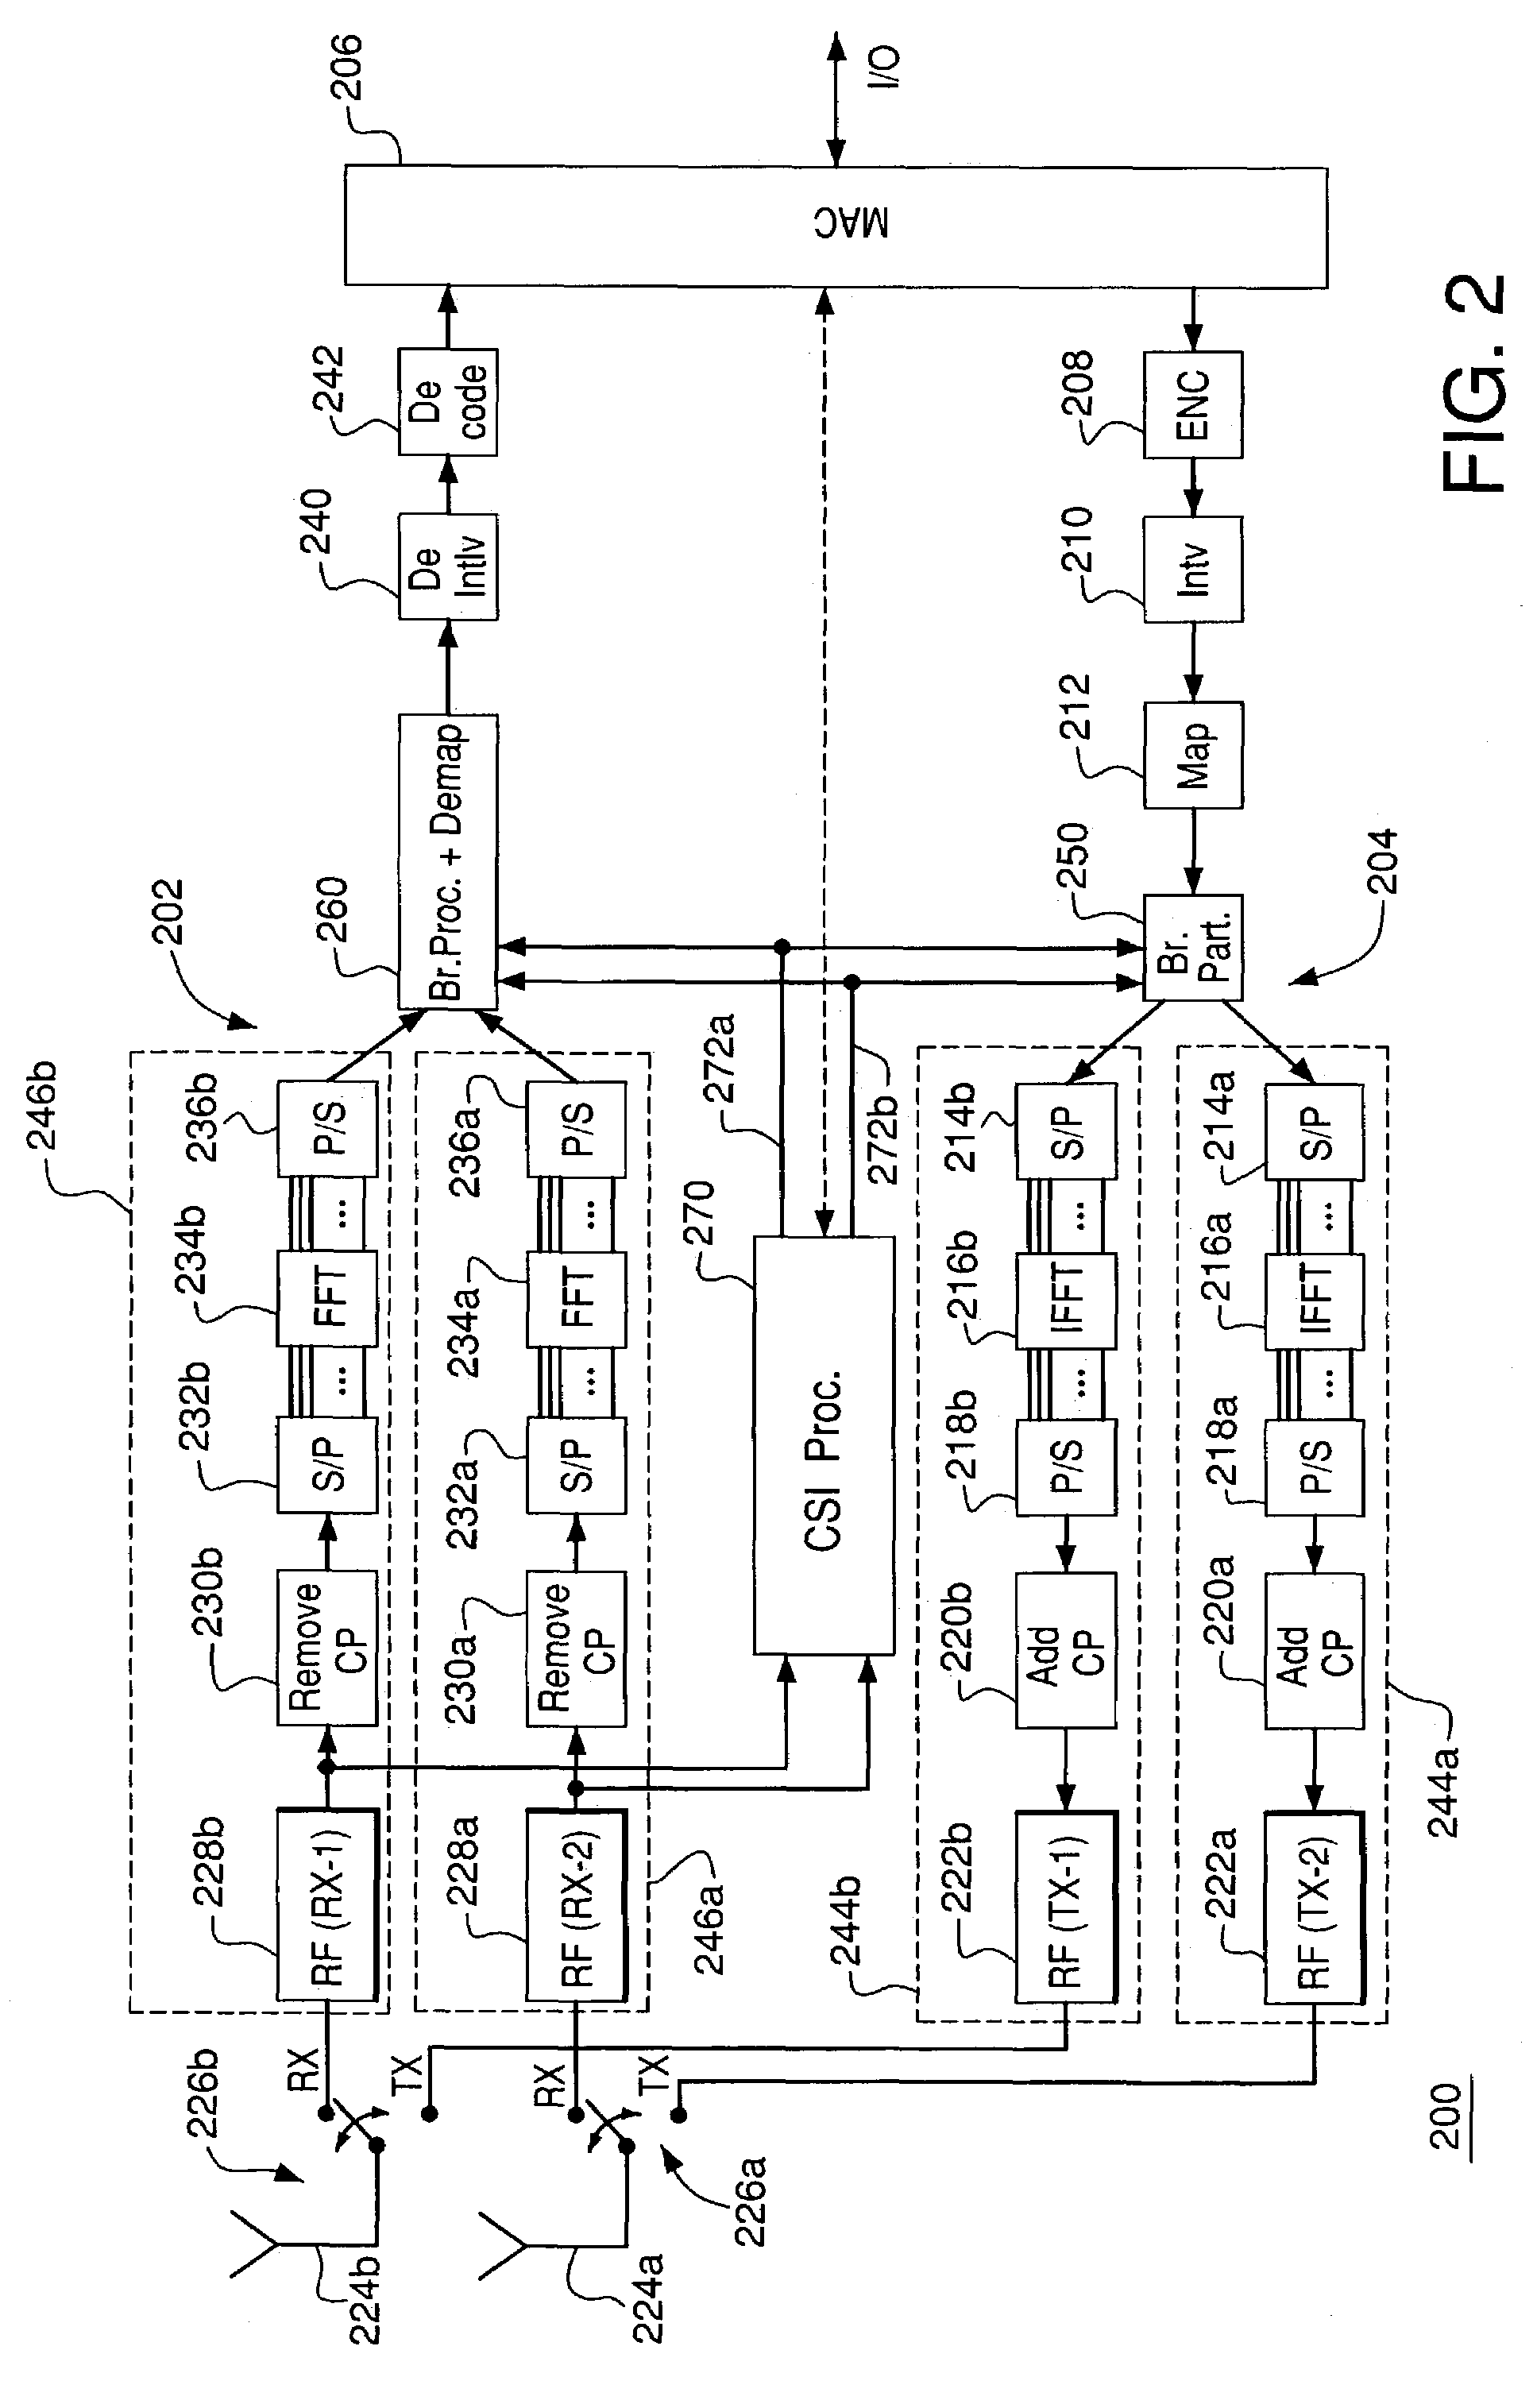 Partitioning scheme for an OFDM transceiver